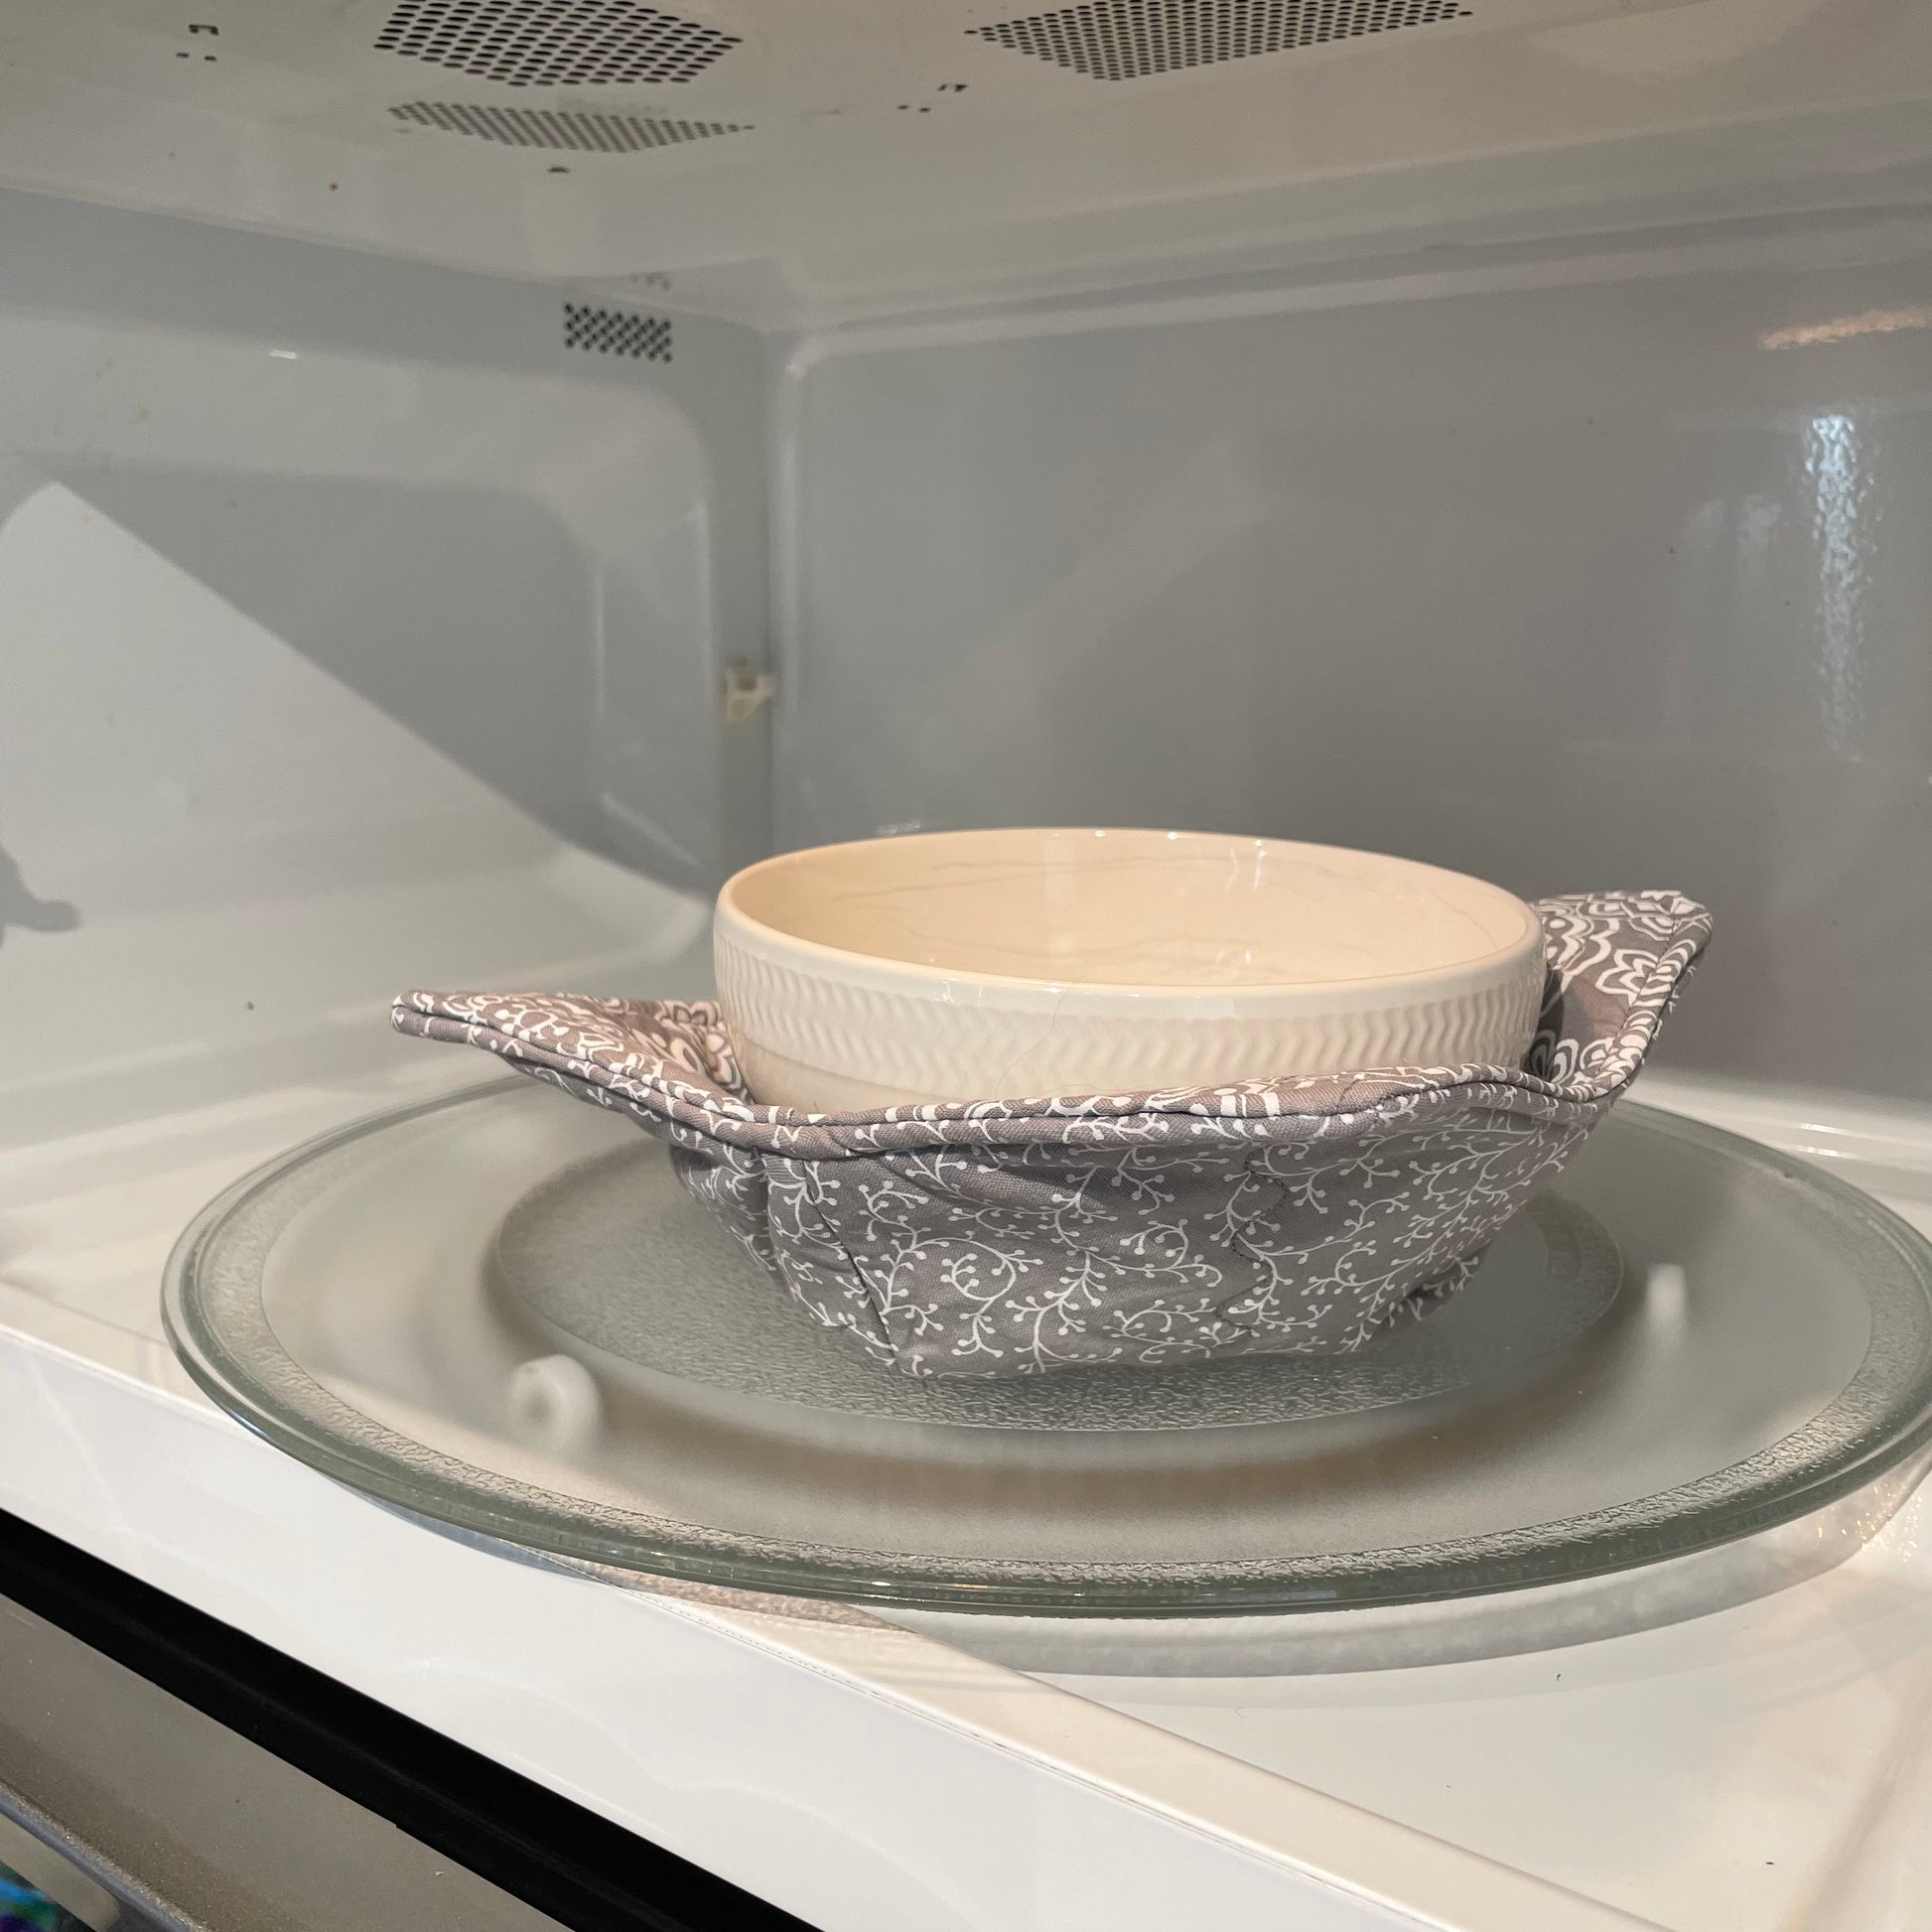 Soup Bowl Cozy. Microwave Soup Cozy - Home Stitchery Decor